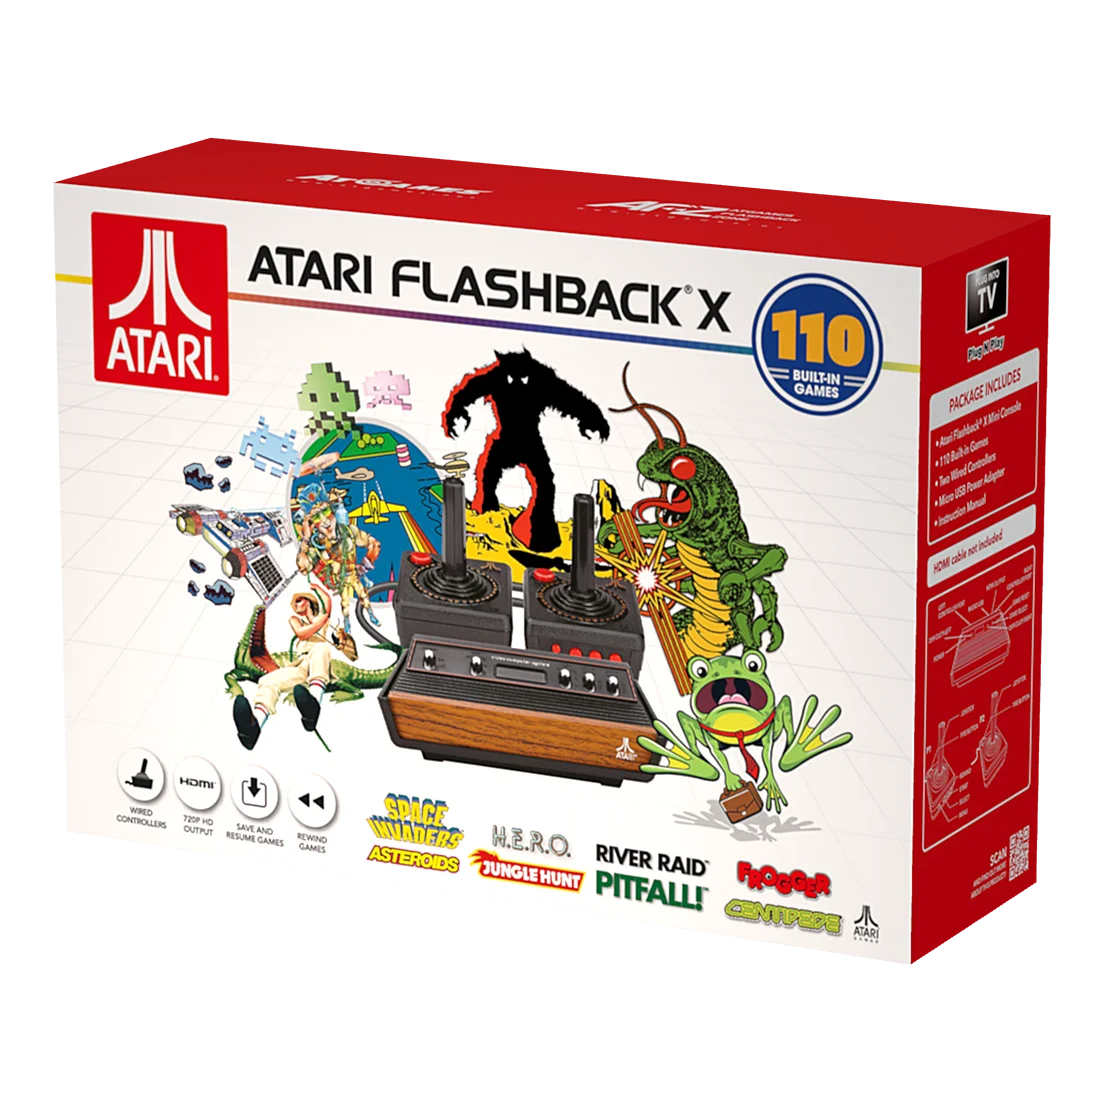  Atari Flashback X Classic Game Console